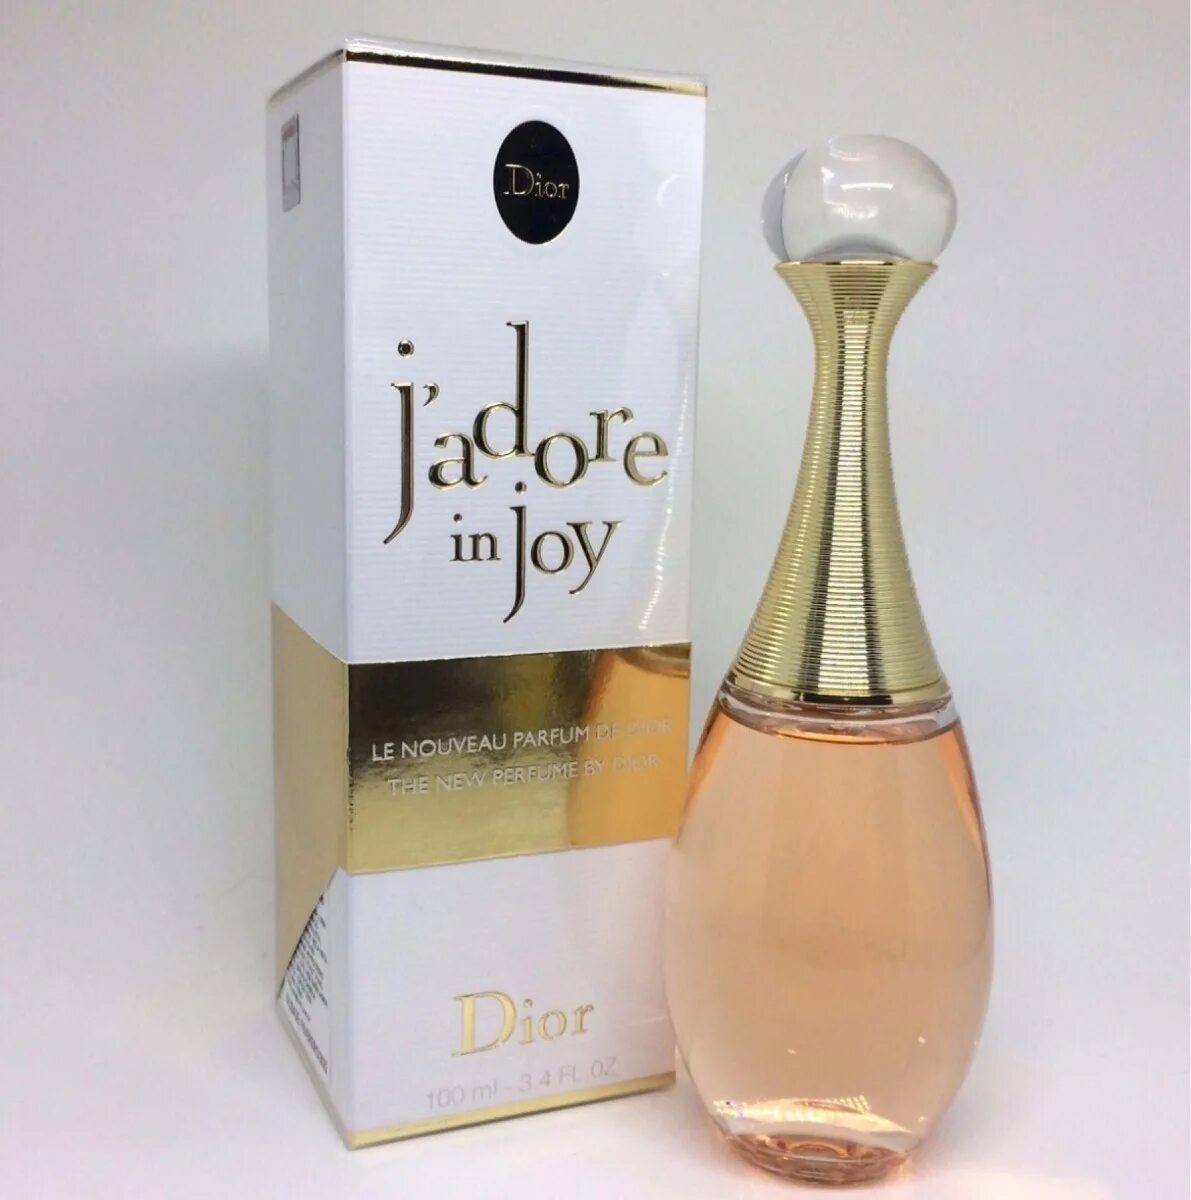 Купить оригинал жадор. Jadore in Joy Dior 100 ml. Christian Dior j'adore EDT, 100 ml. Christian Dior j'adore in Joy 100 ml. Диор - j'adore in Joy EDT 100ml.